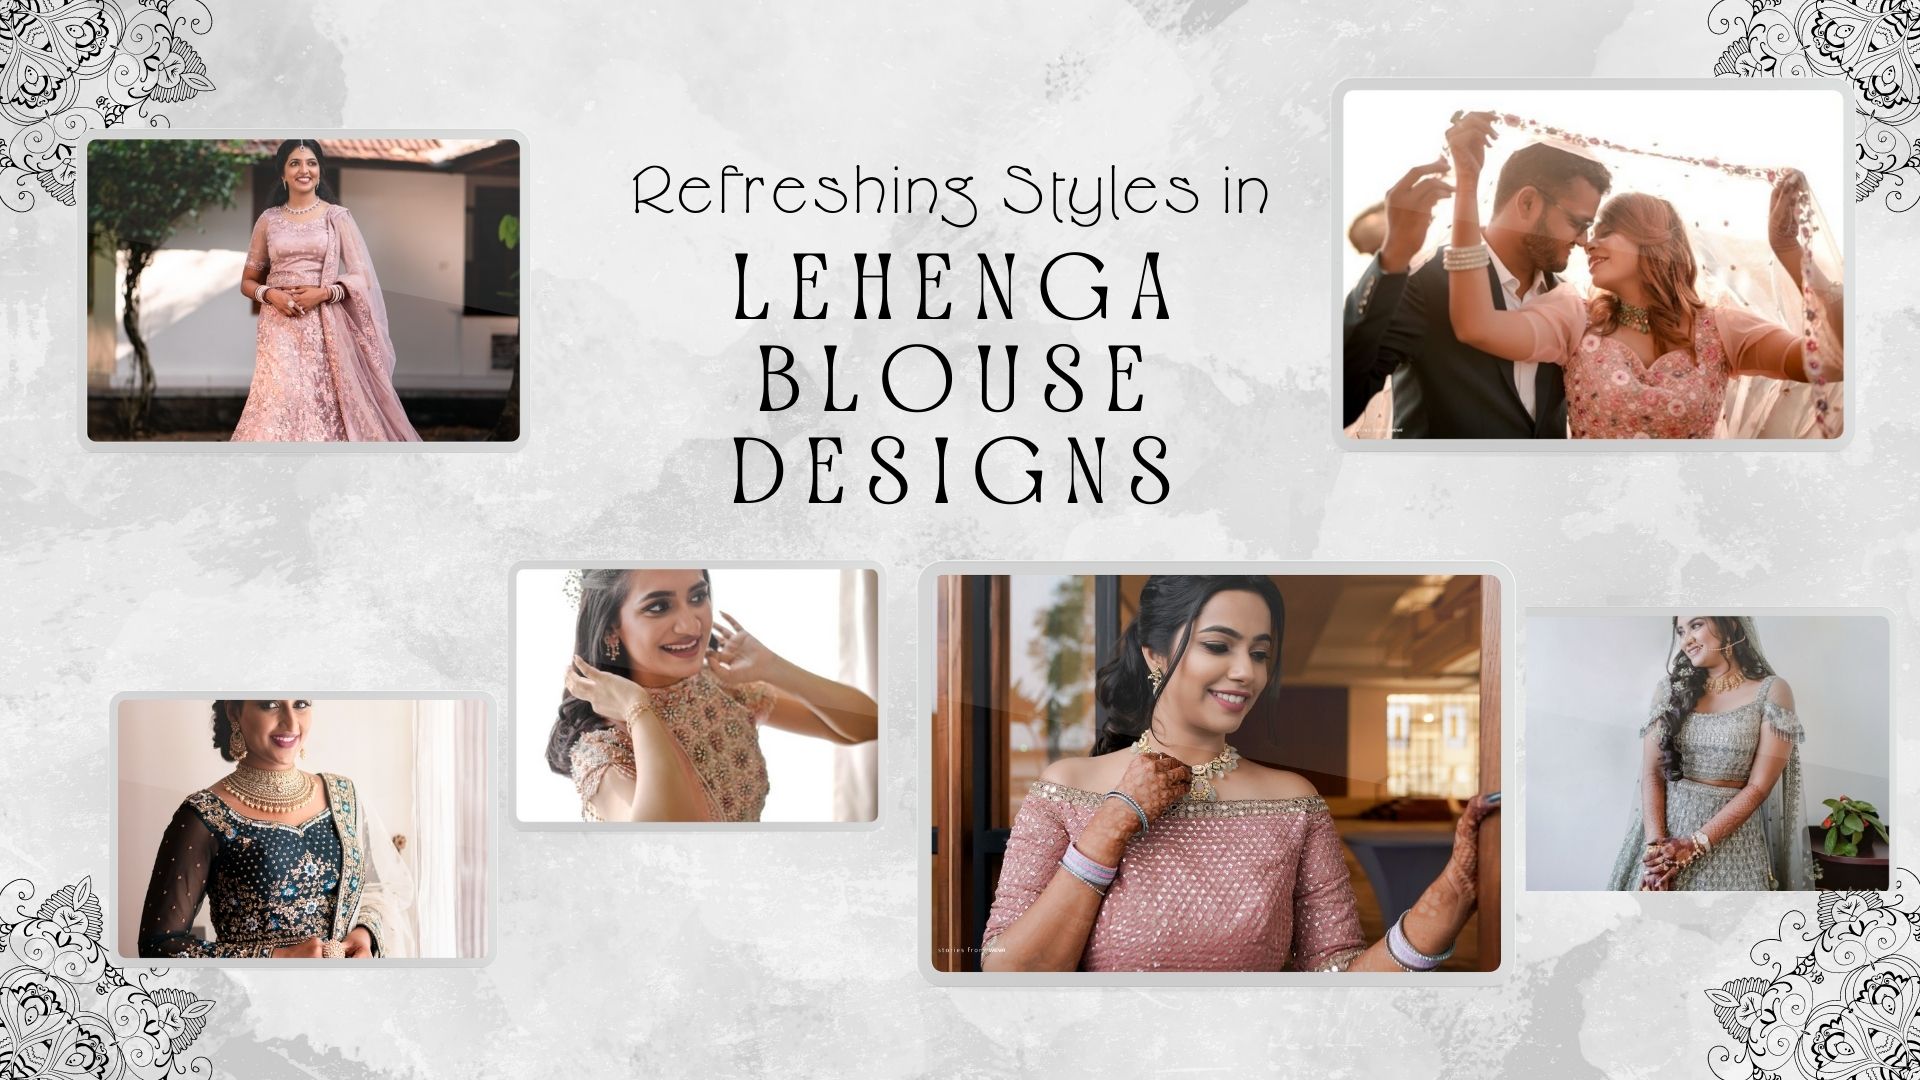 Net Lehenga Blouse Design For Wedding Buy Online Collection